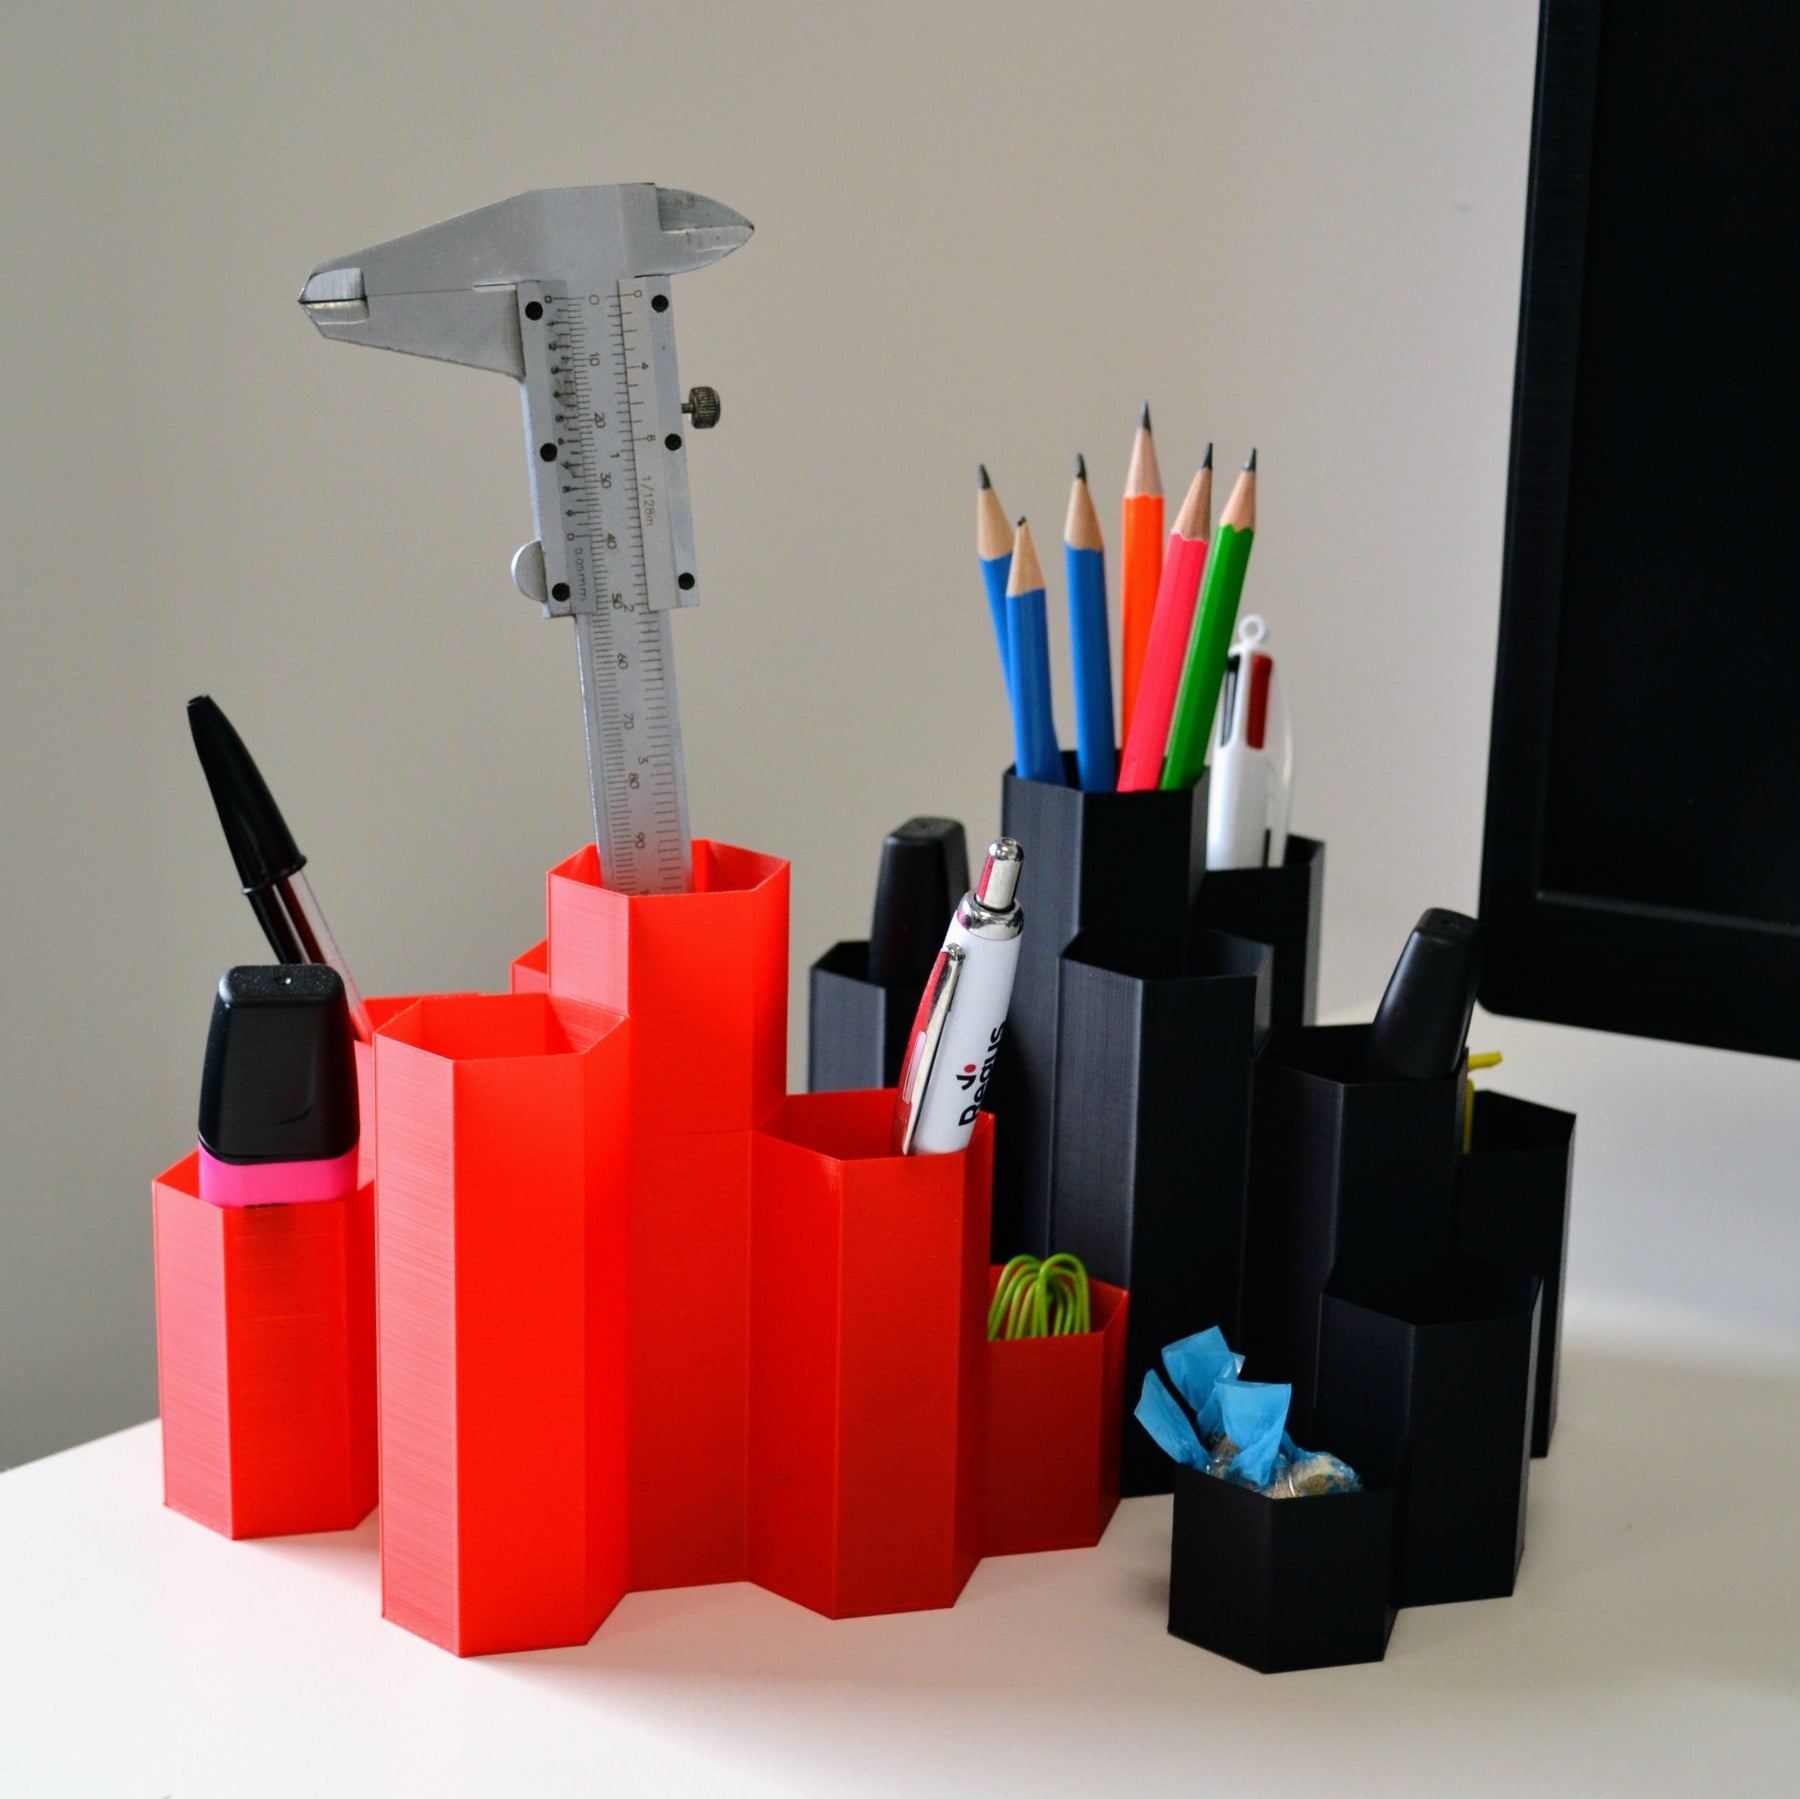 Hex - The 3D printed desk organizer